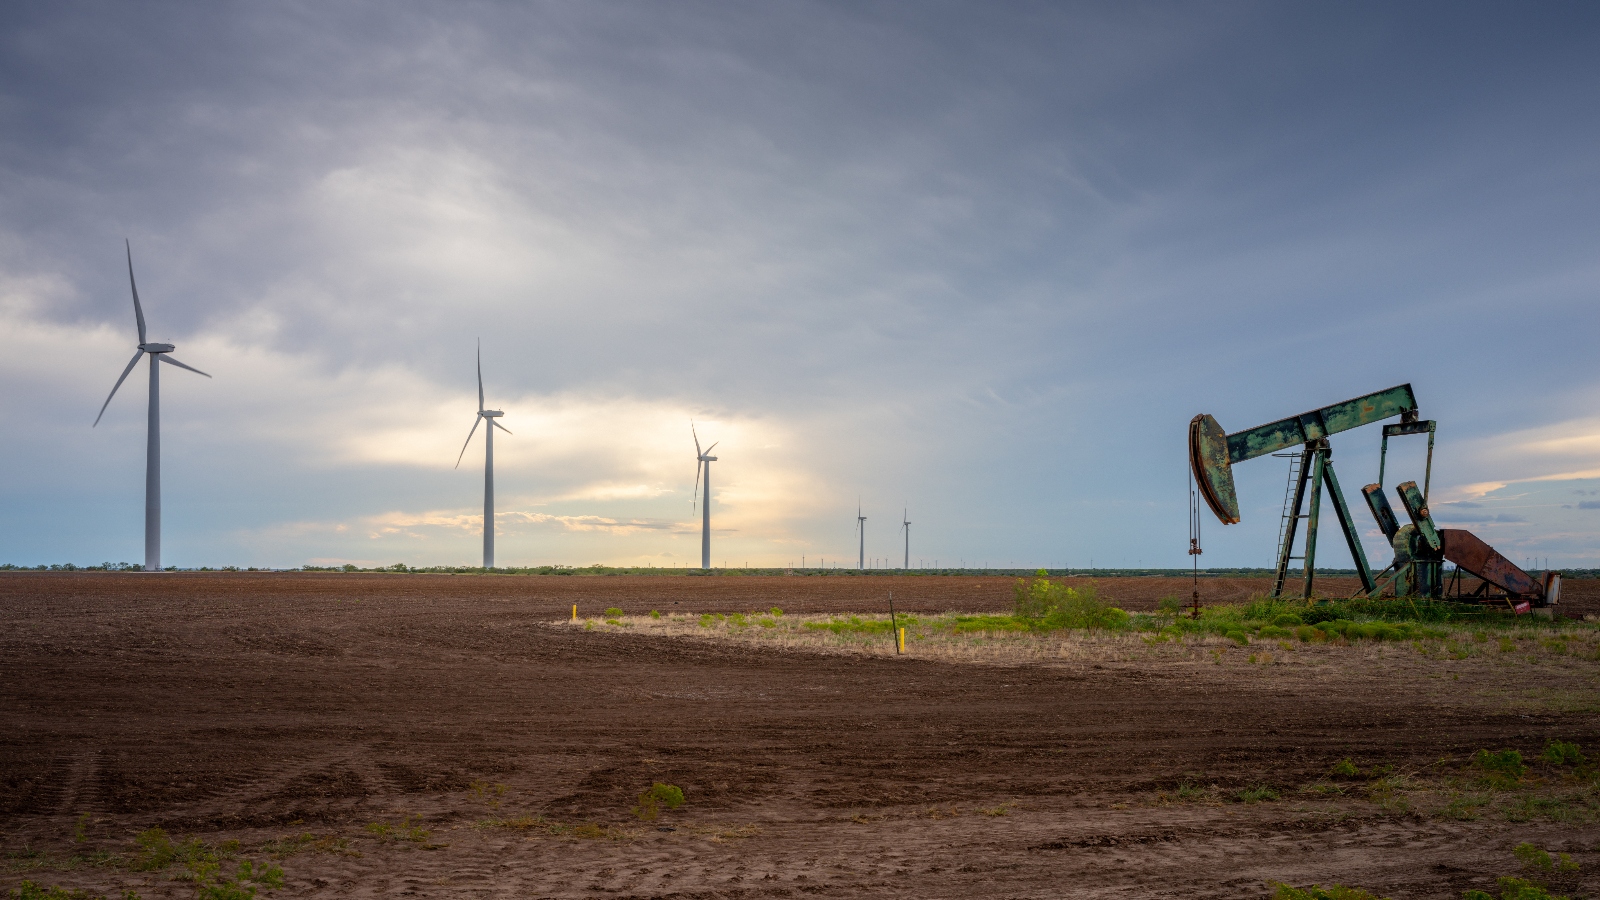 An oil pumpjack near a field of wind turbines.